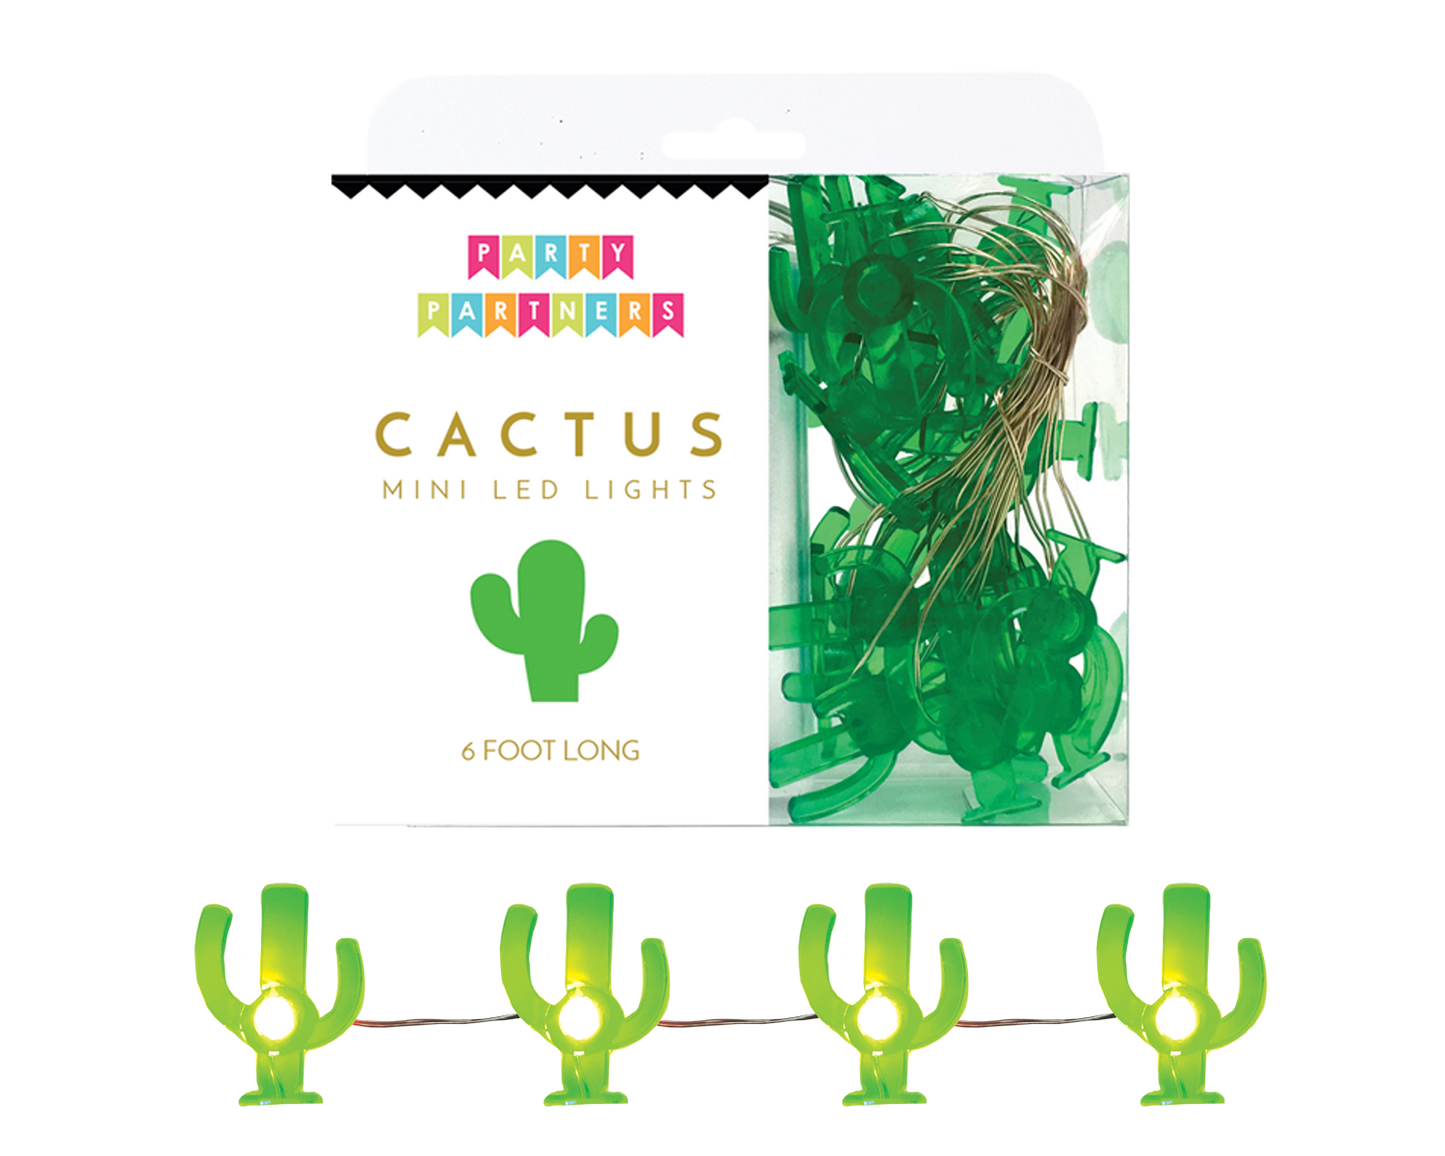 Cactus Mini LED Lights Garland